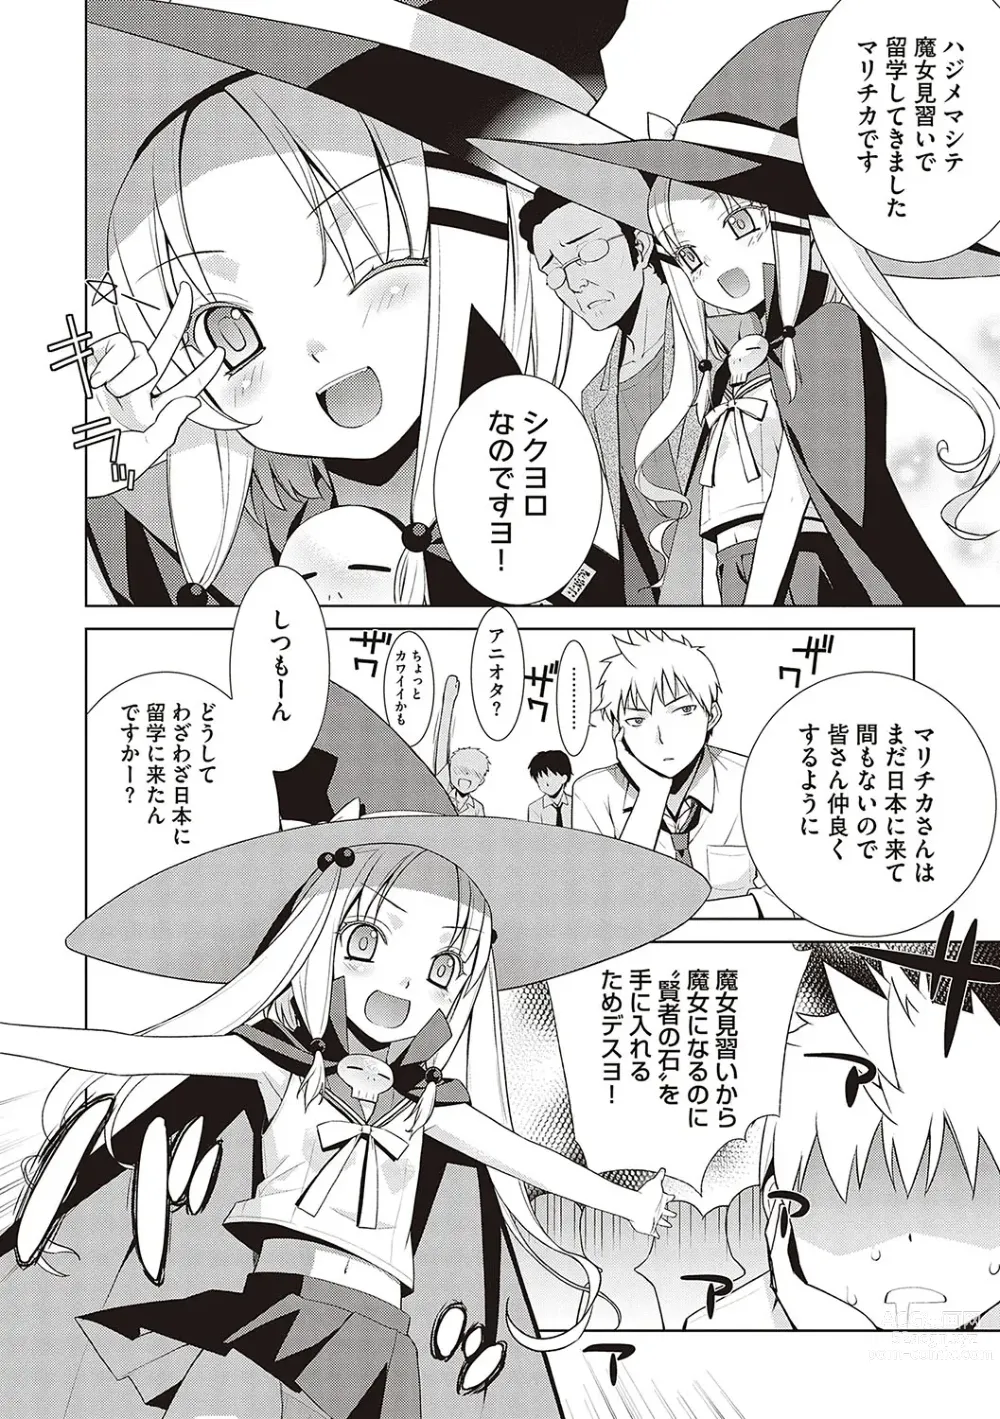 Page 251 of manga KOAKUMA DAISY